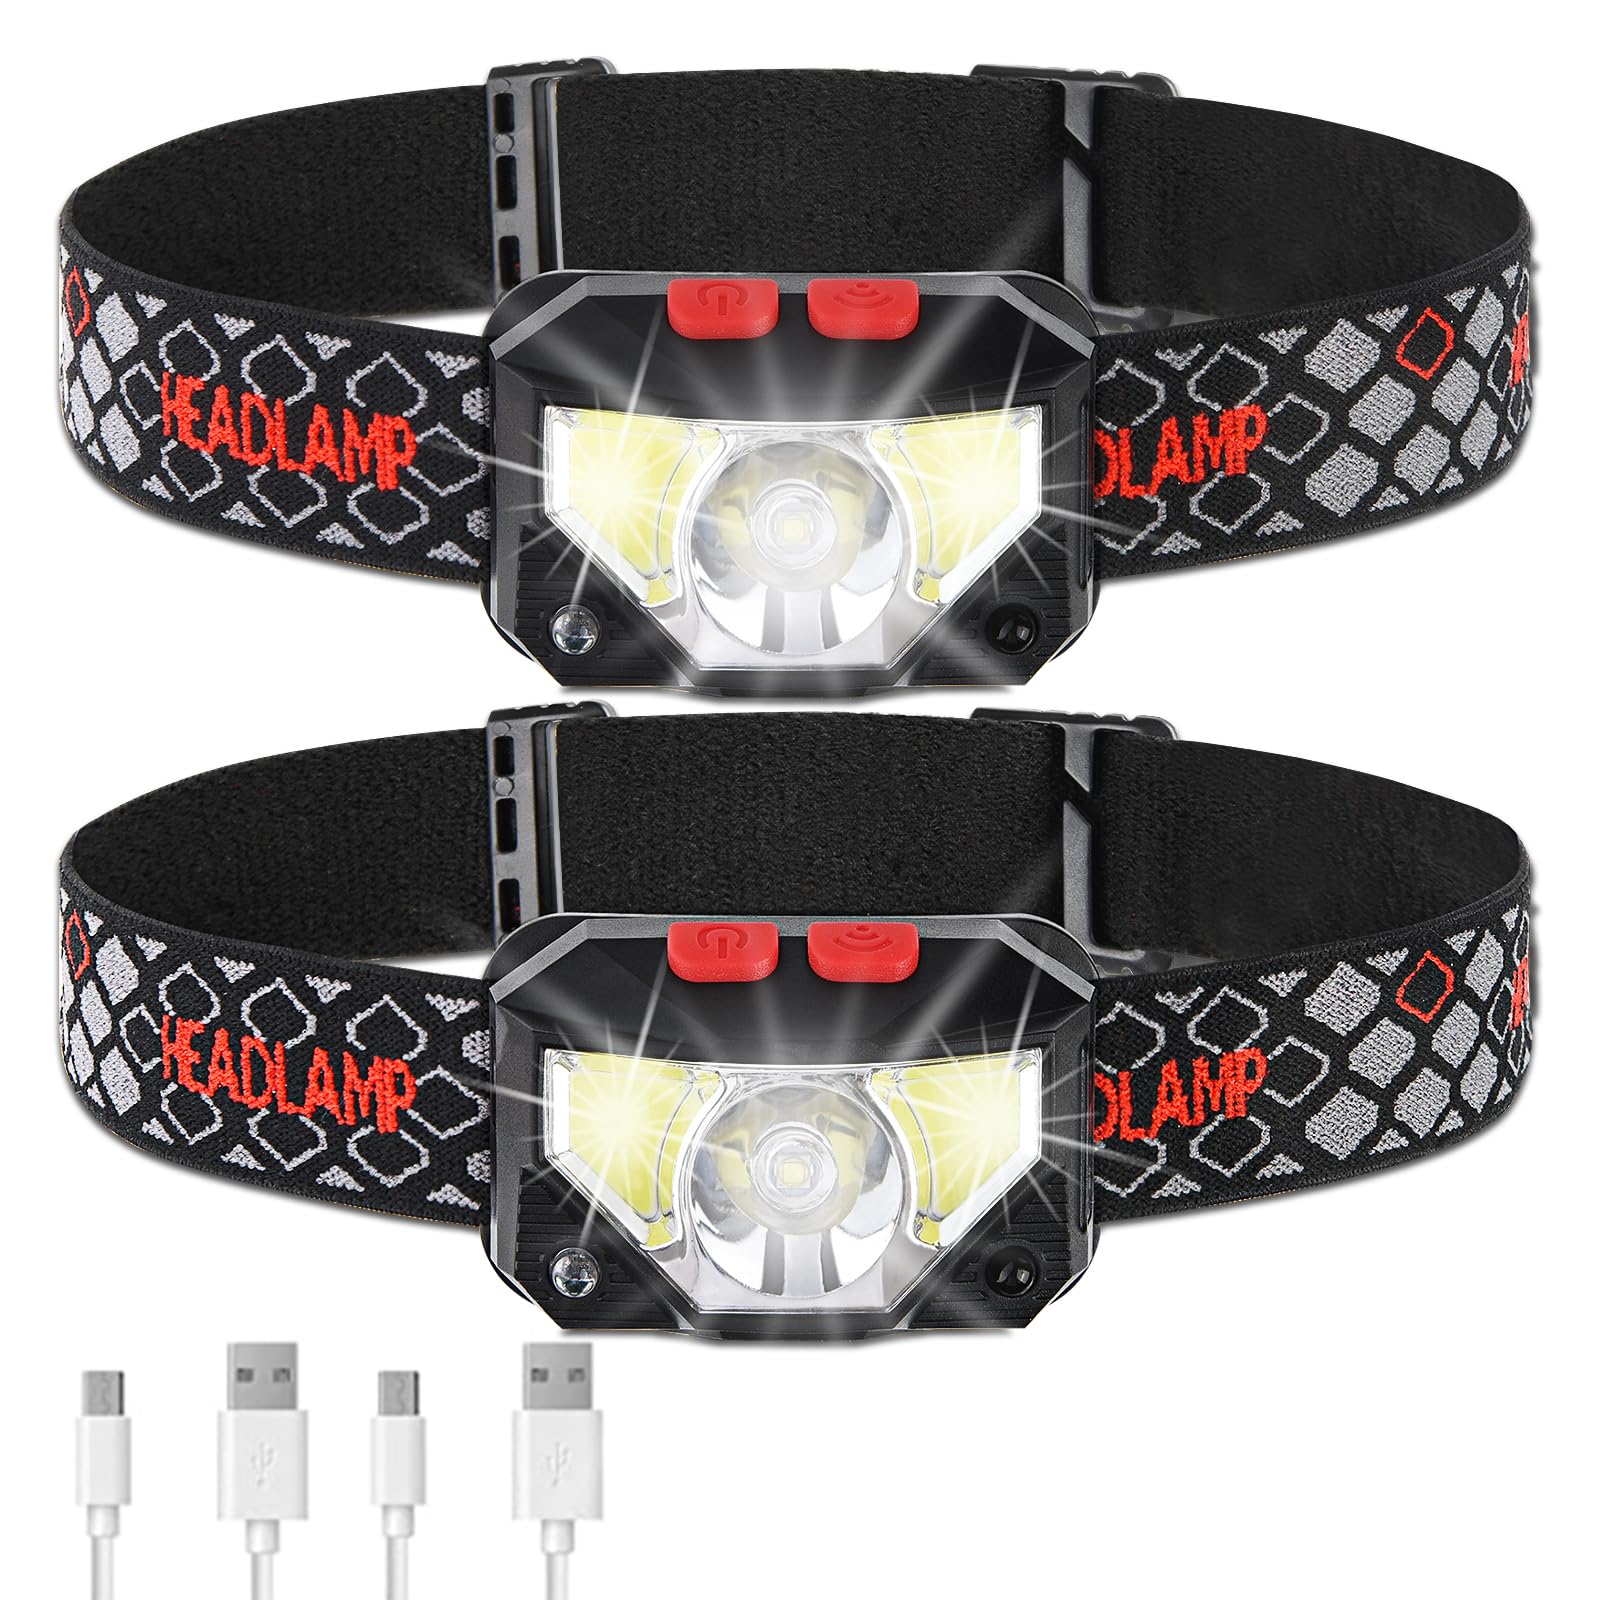 Vekkia Bright Led-Headlamp-Rechargeable, 2-Pack Waterproof-Motion-Sensor-Headlight,White Red LED Head Lamp, Head-Flashlight for 